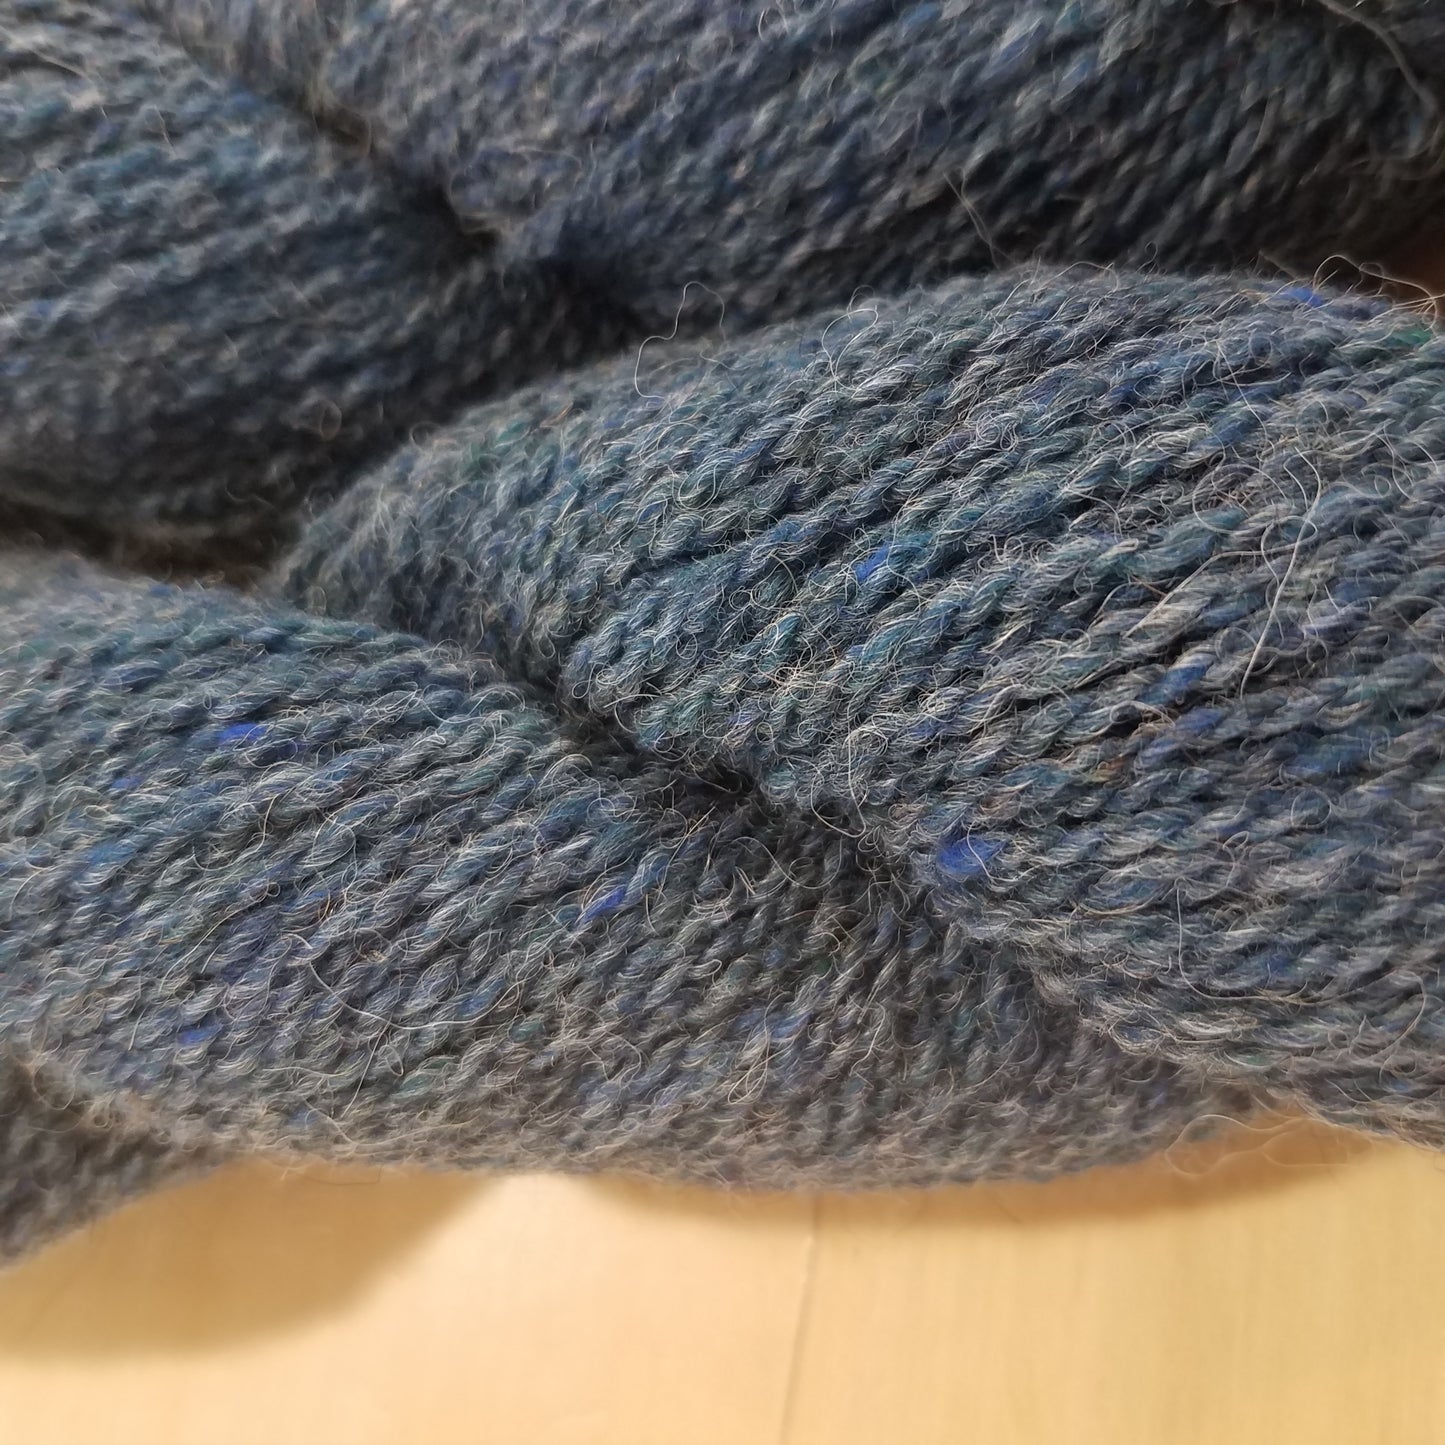 Alpaca Elegance by Green Mountain Spinnery: Blue Lotus - Maine Yarn & Fiber Supply